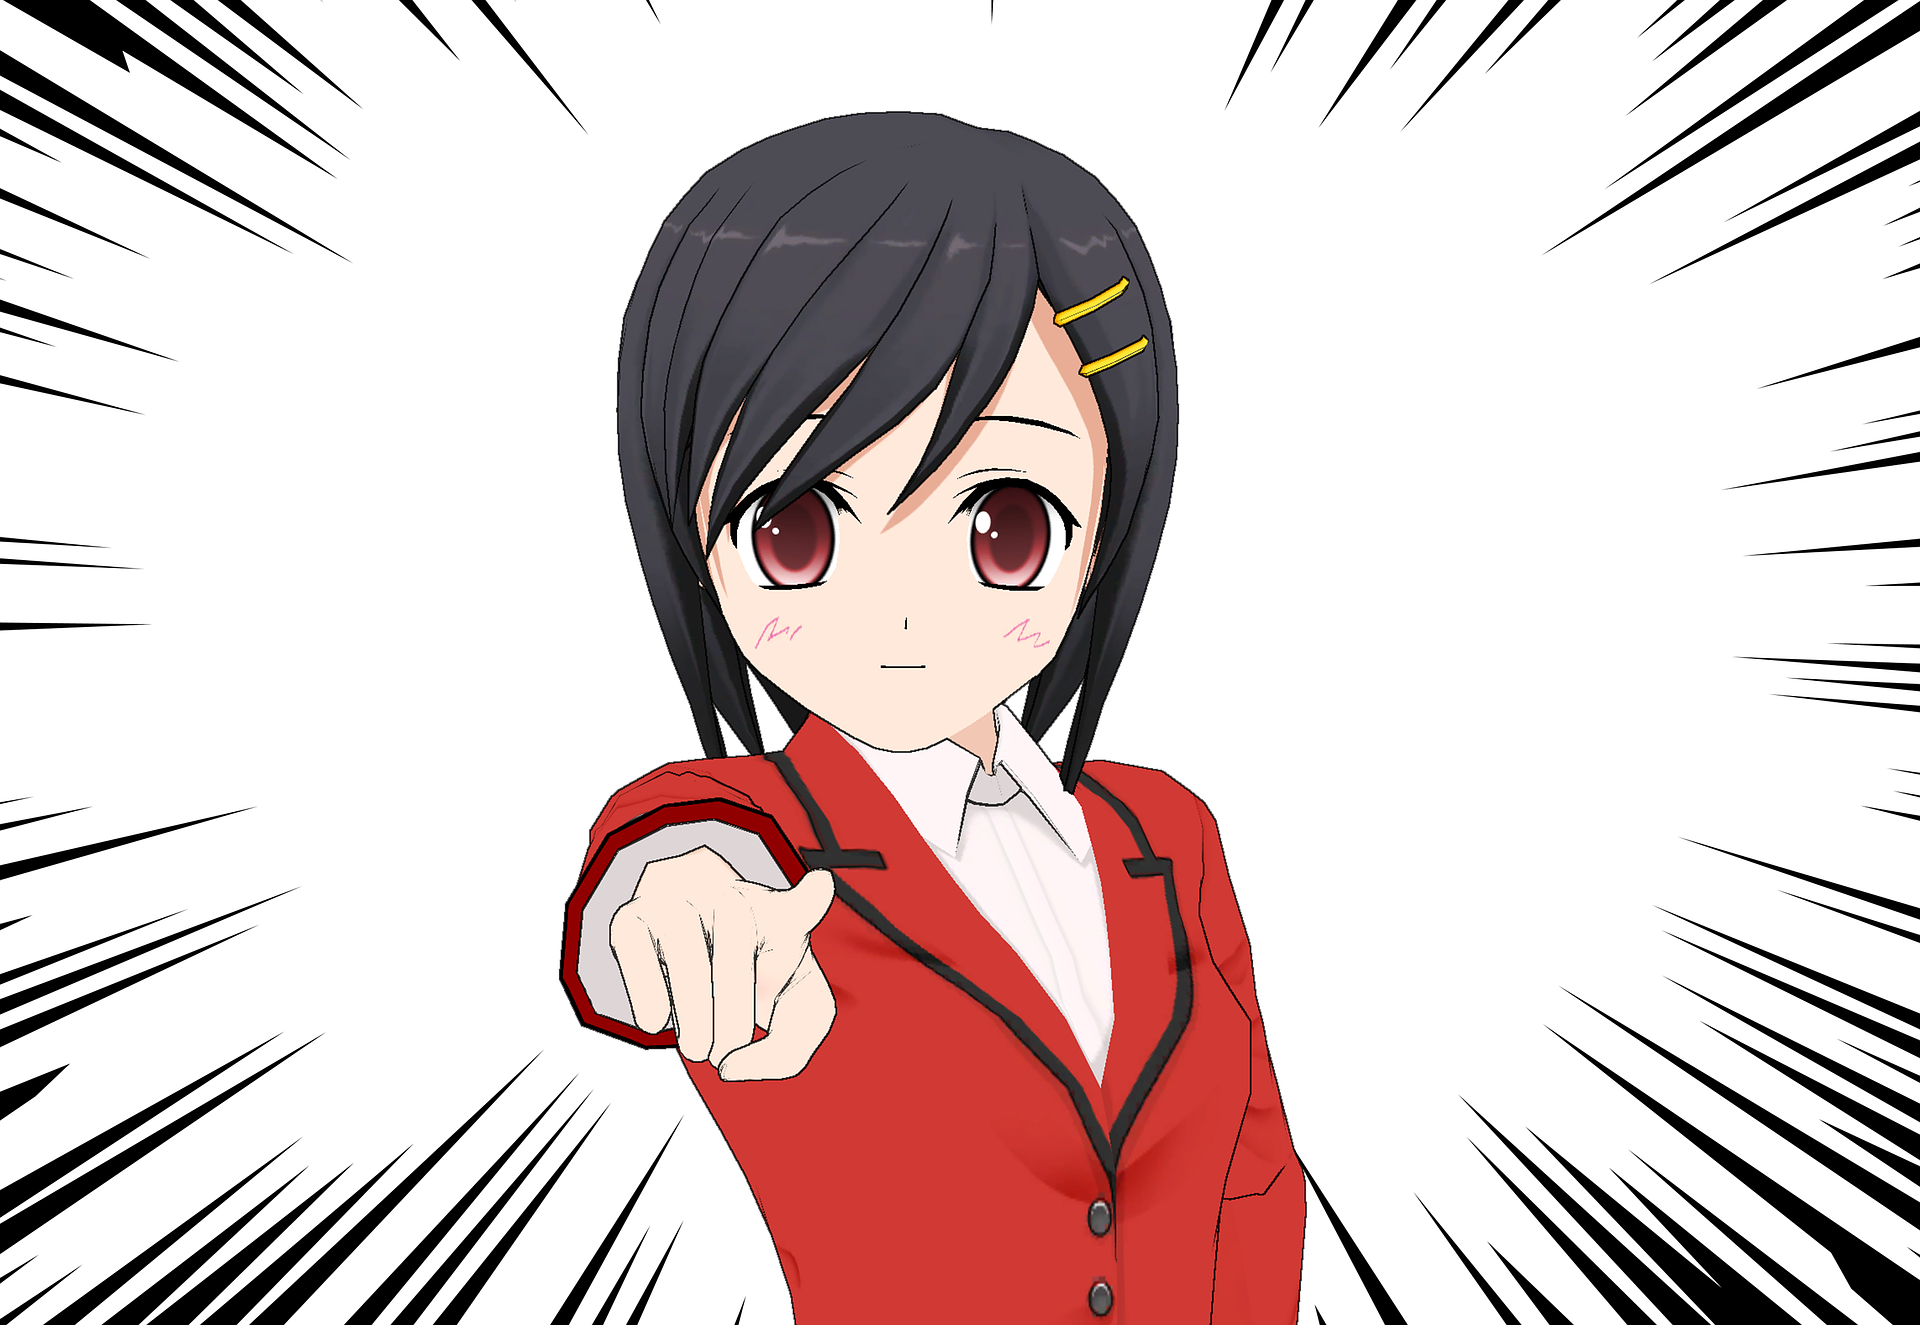 manga teen pointing at you, red shirt black hair